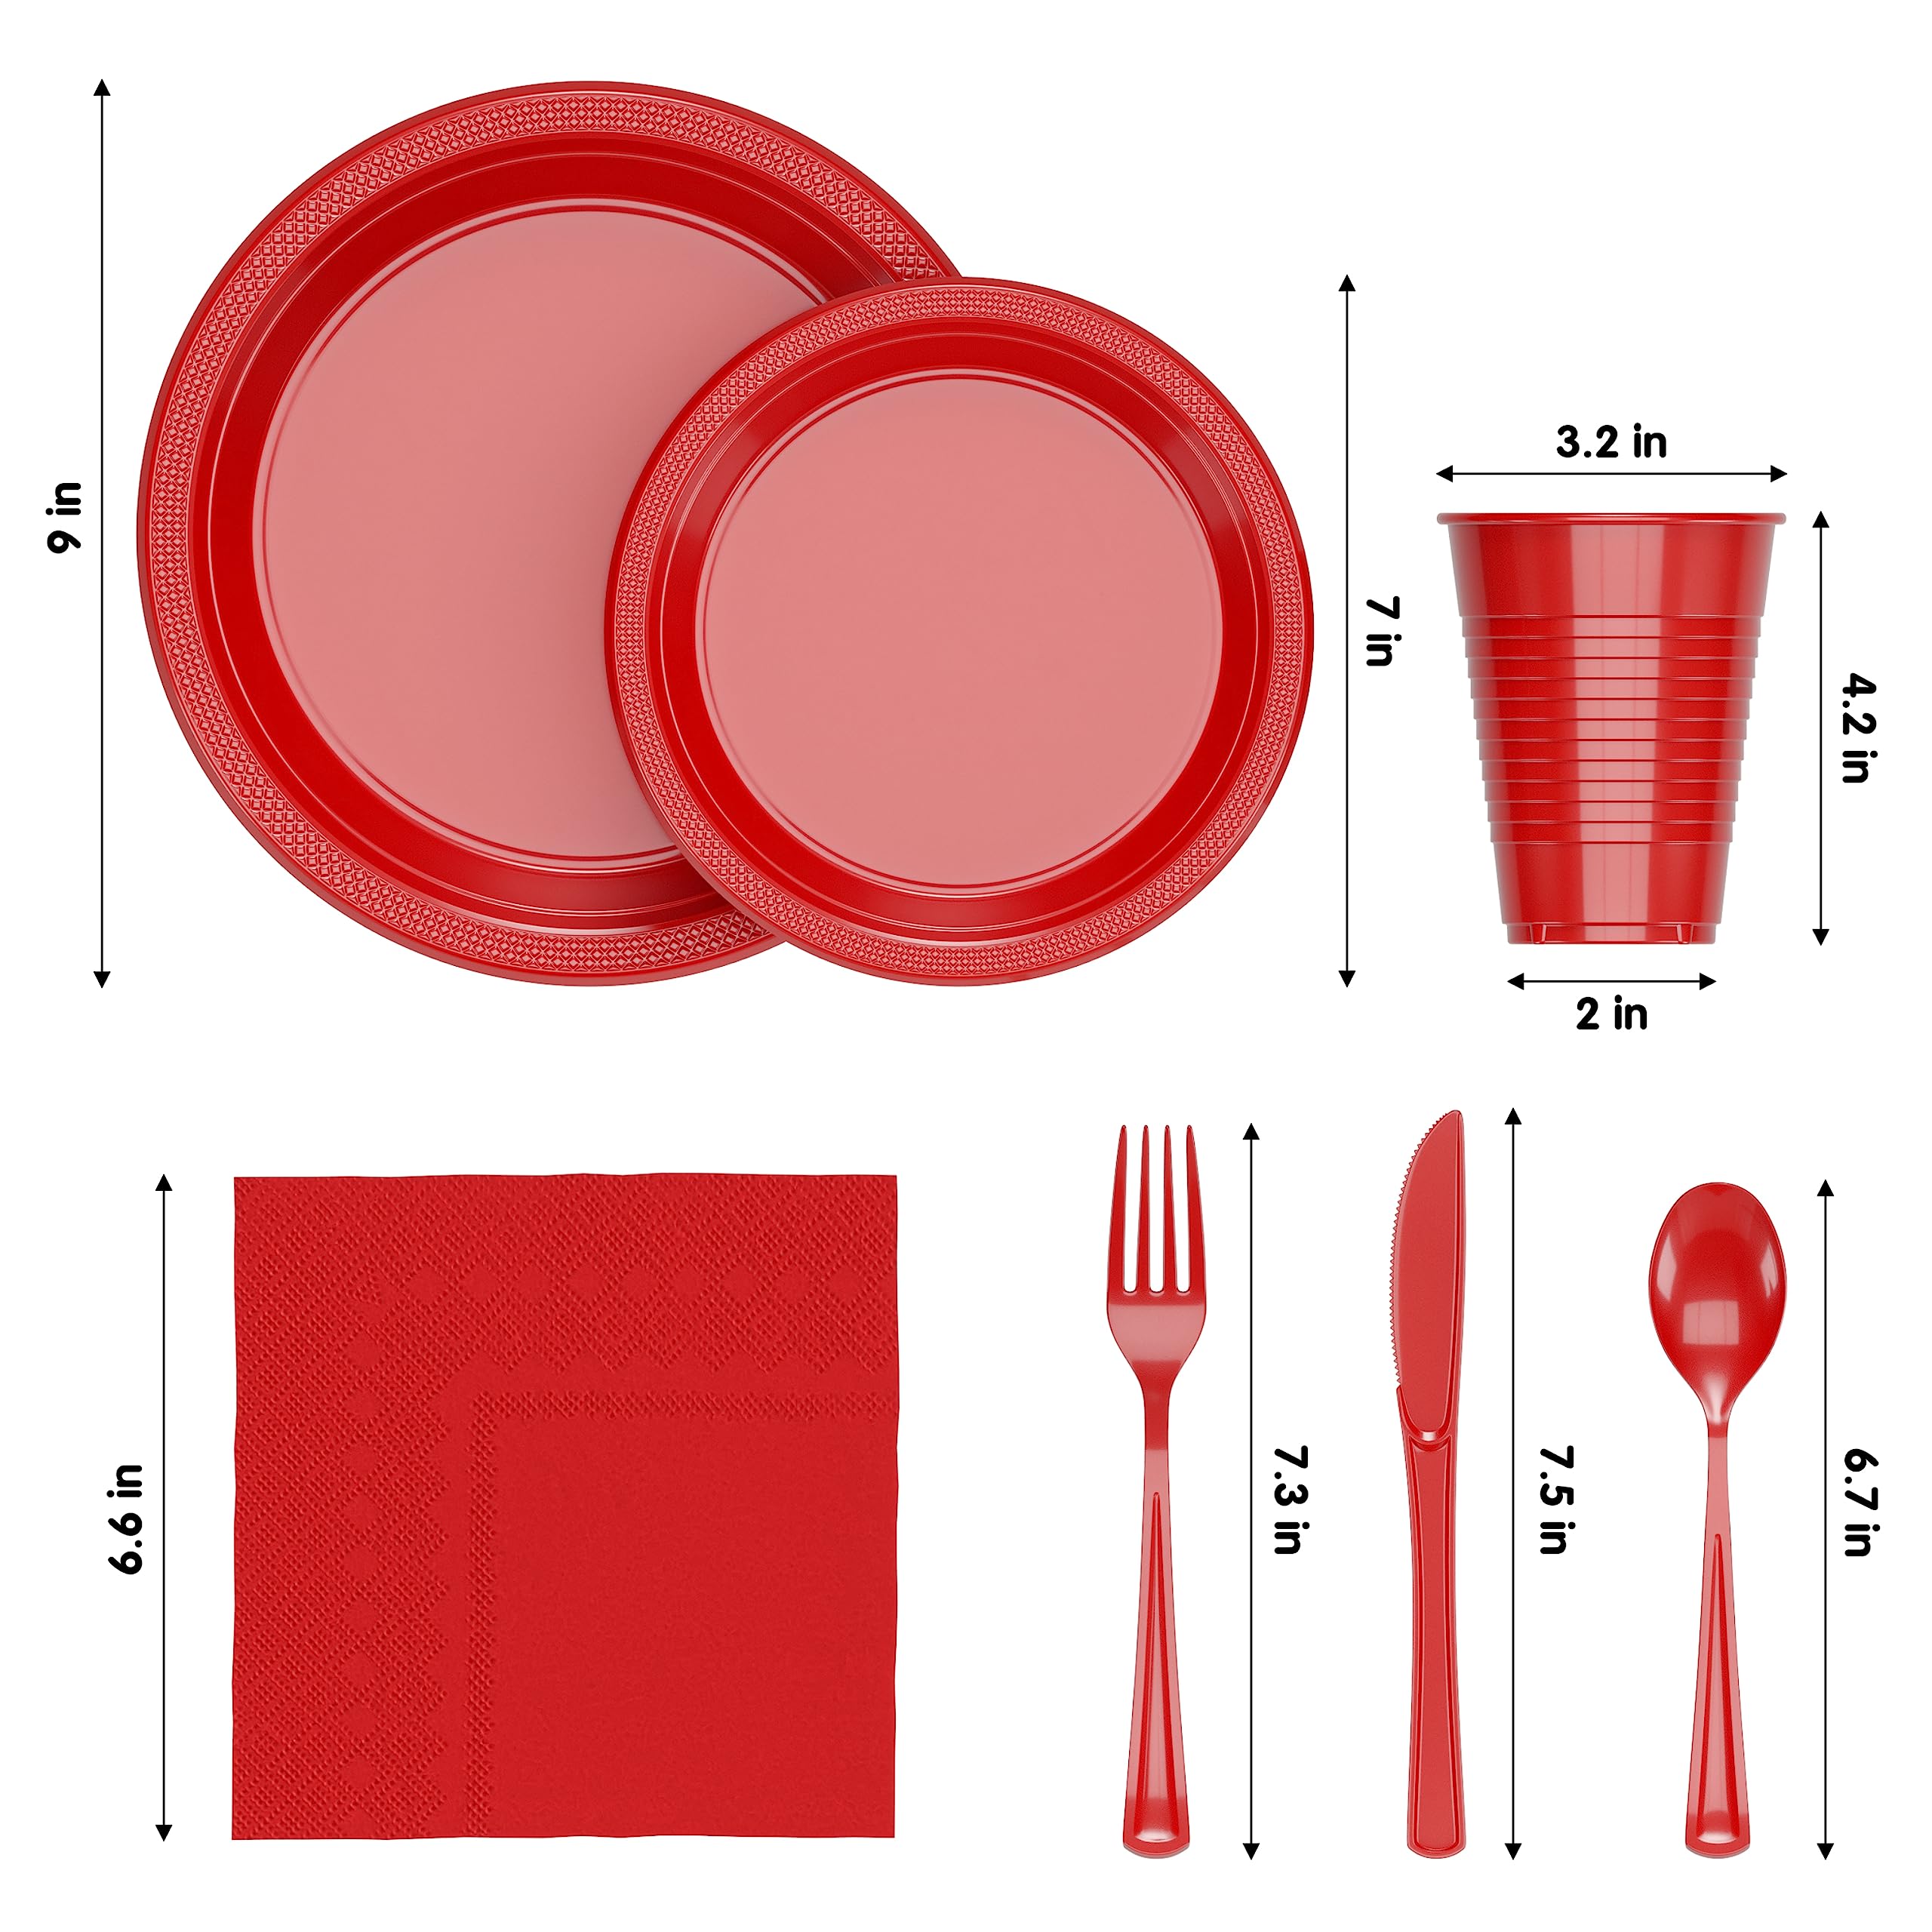 350 Pcs Red Plastic Disposable Tableware Set